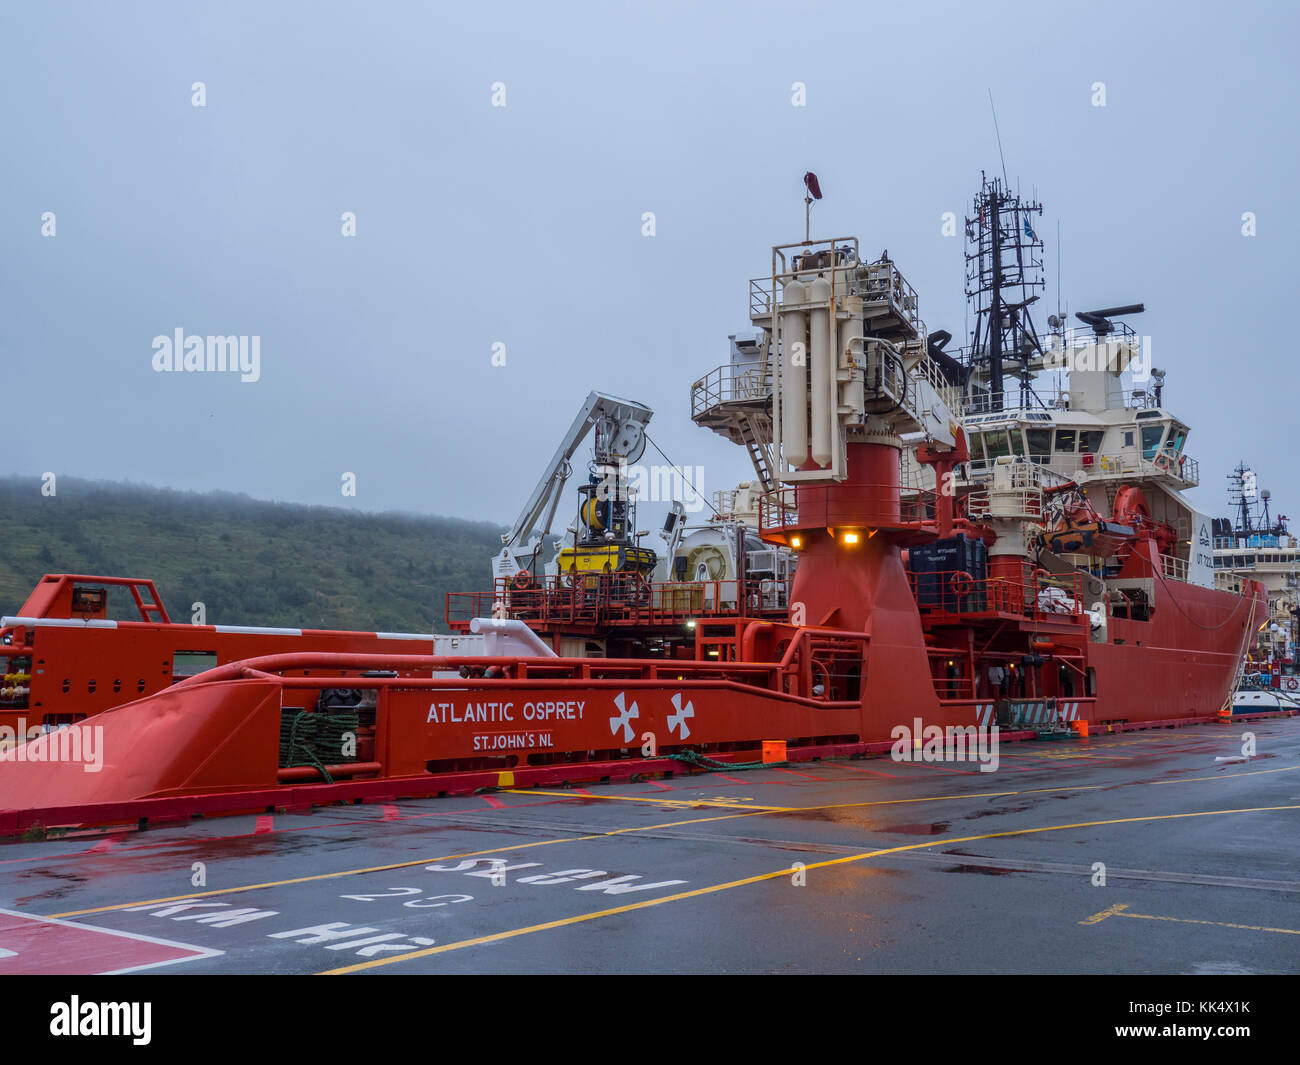 Atlantic Osprey offshore supply ship in the harbor, St. John's, Newfoundland, Canada. Stock Photo